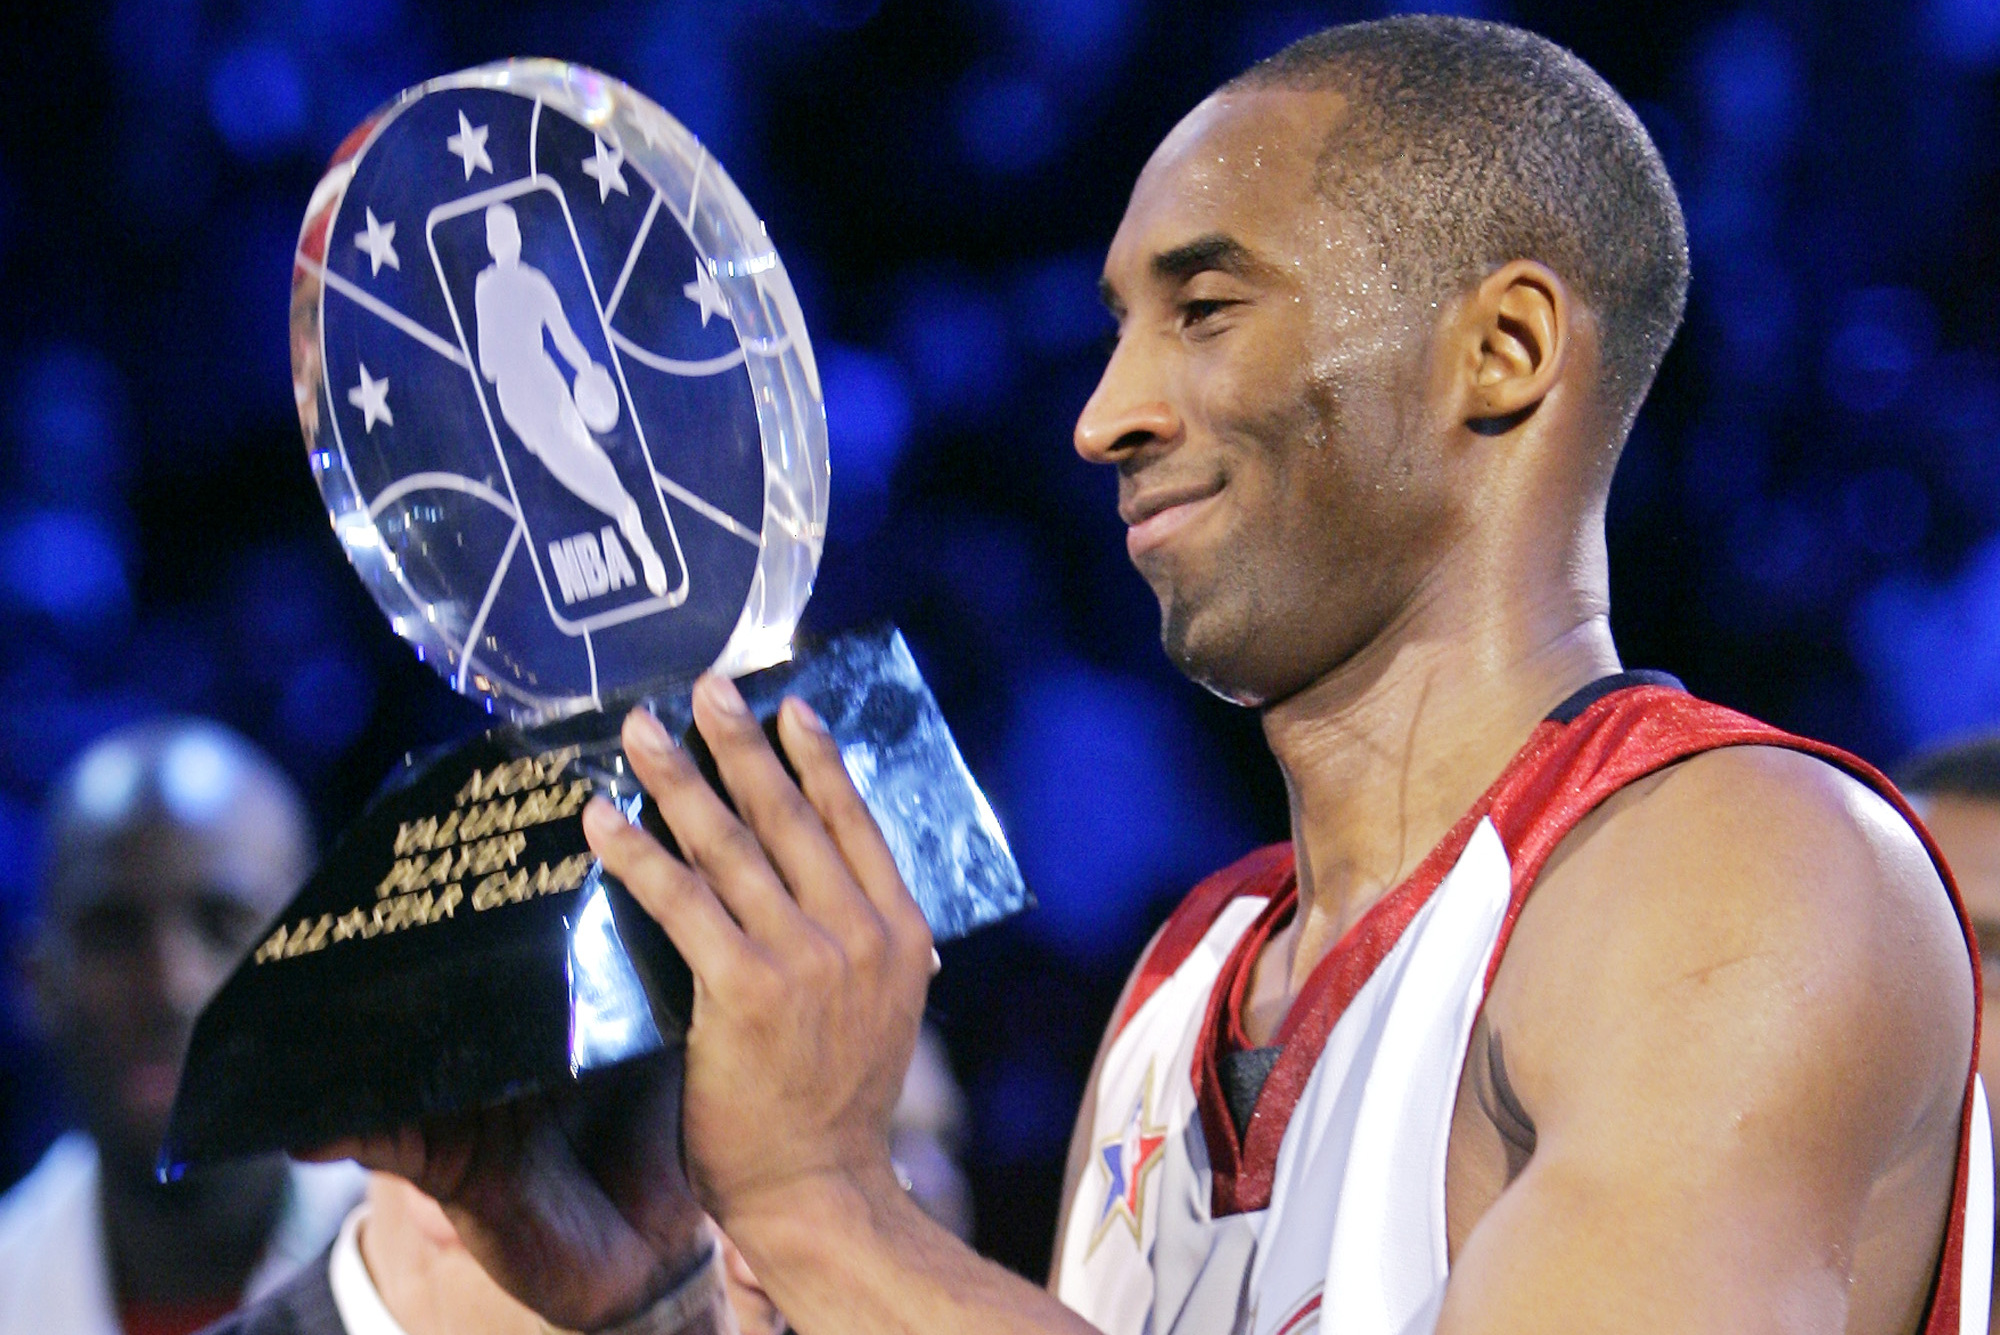 NBA names All-Star Game award in honor of Kobe Bryant